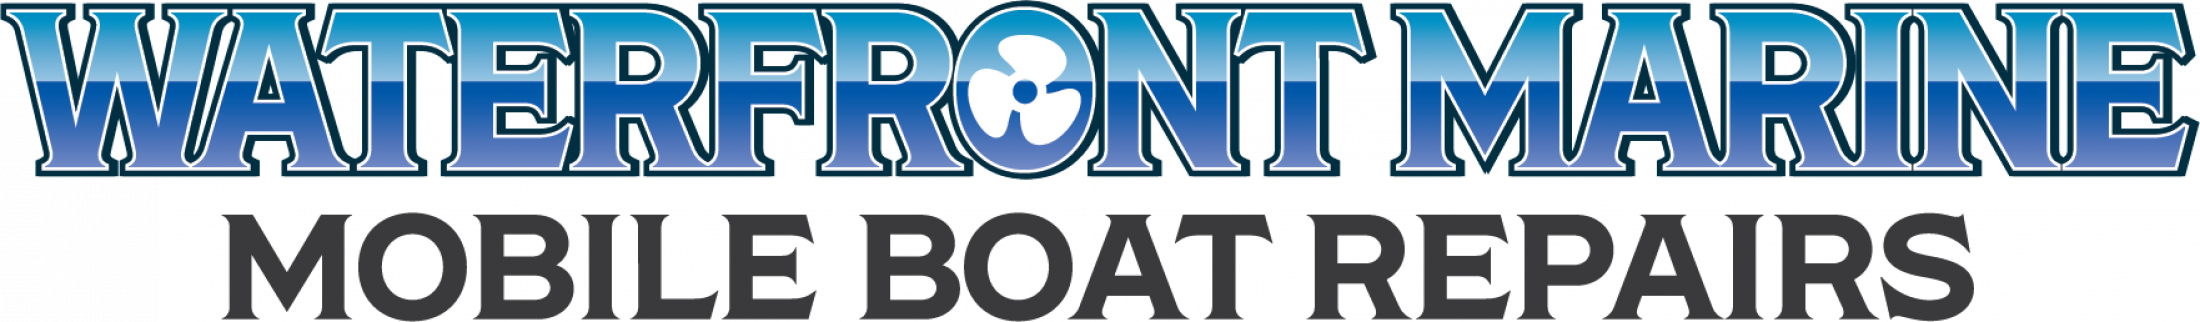 gallery/waterfront-marine-logo